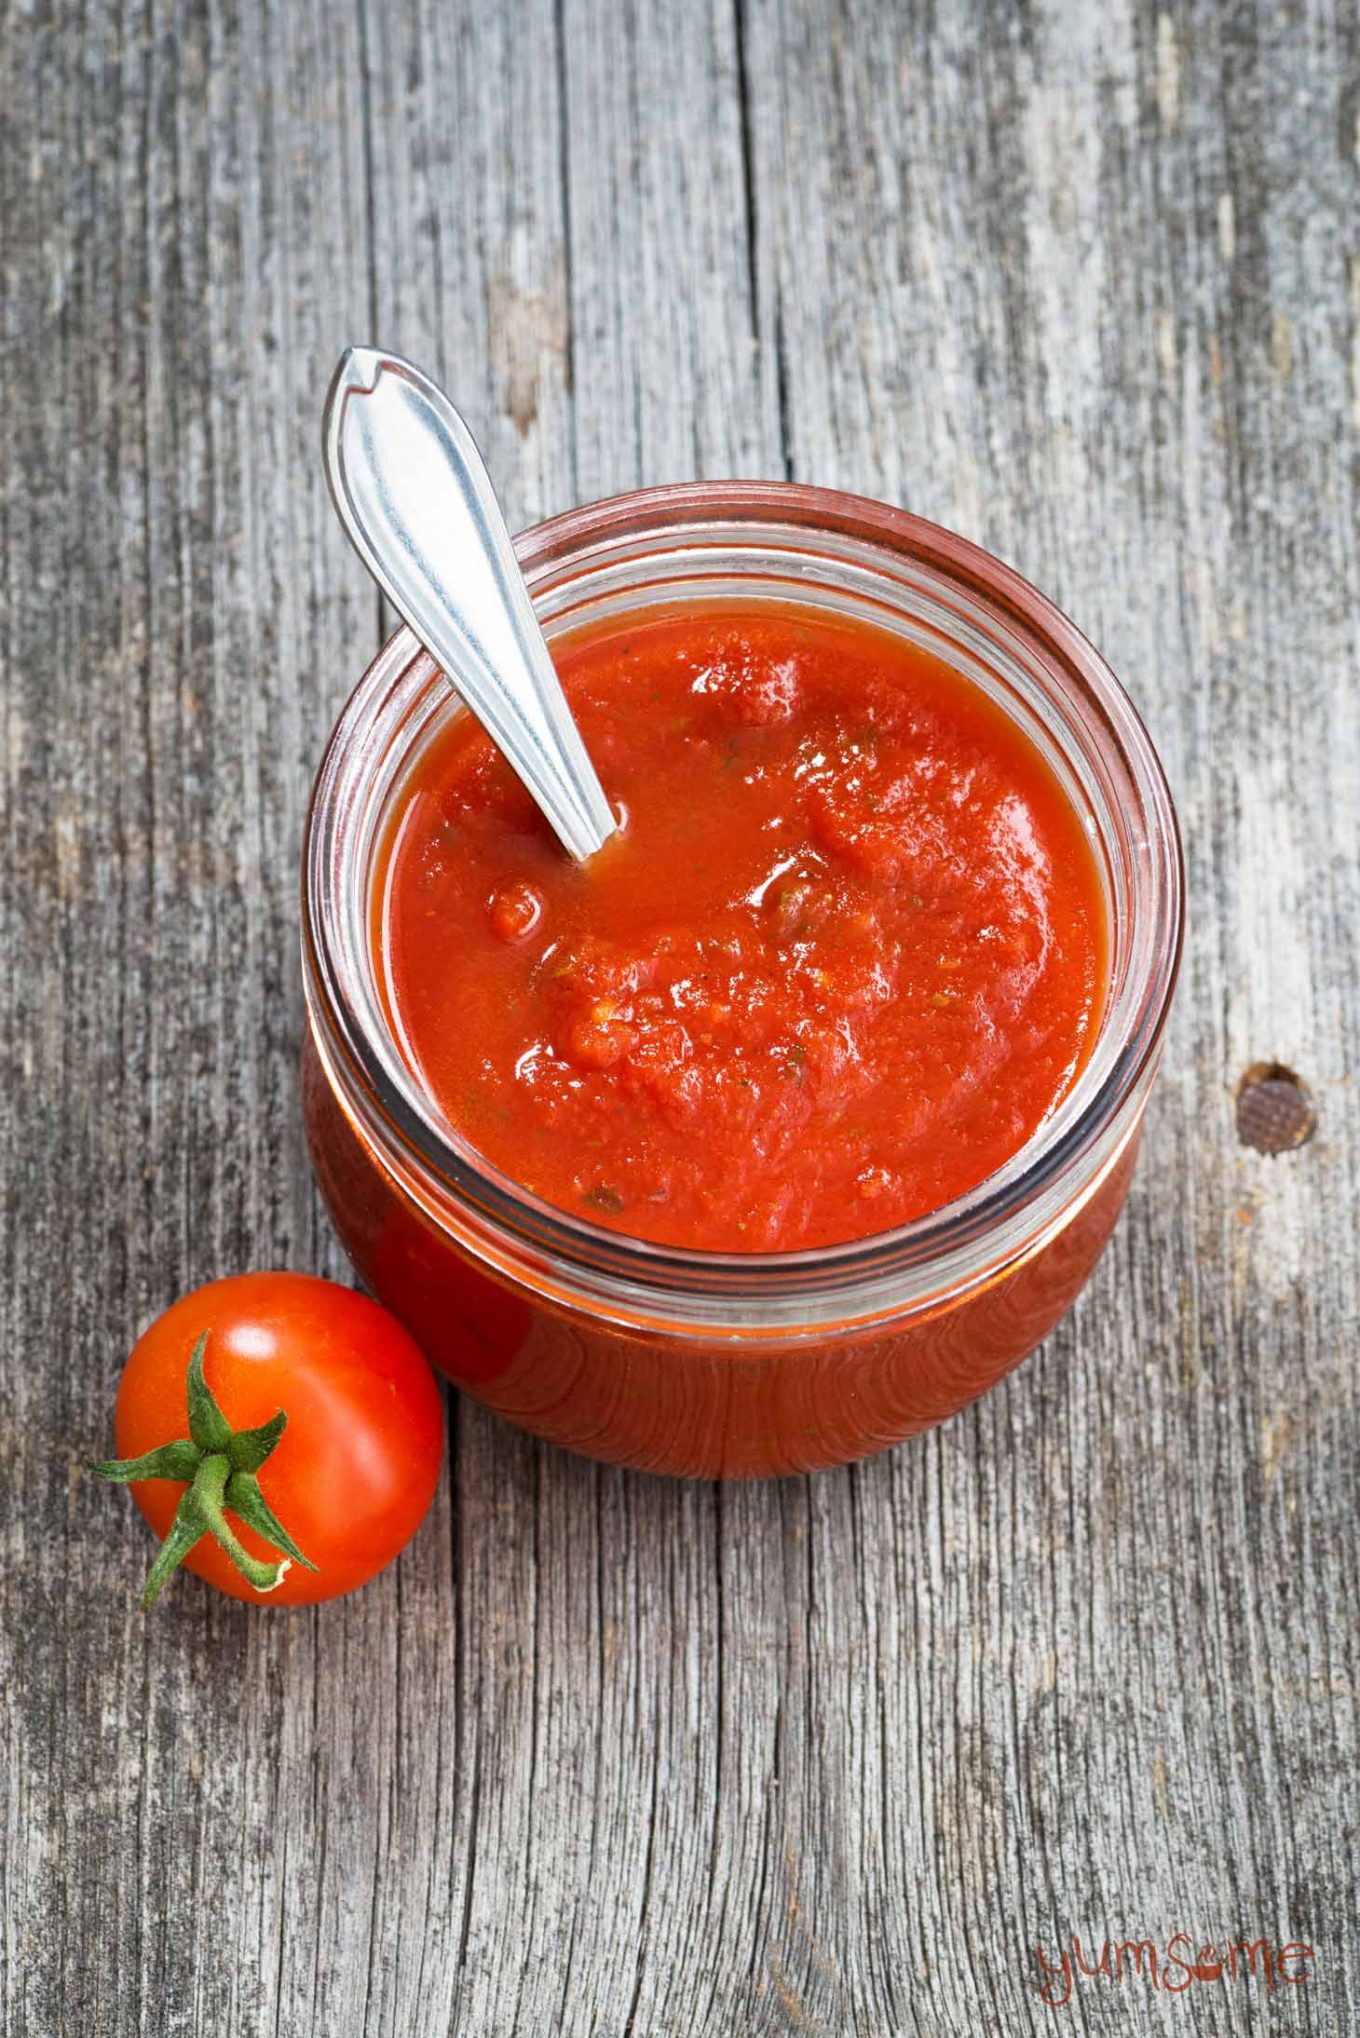 easy vegan pasta recipes - classic Italian tomato sauce by Yumsome